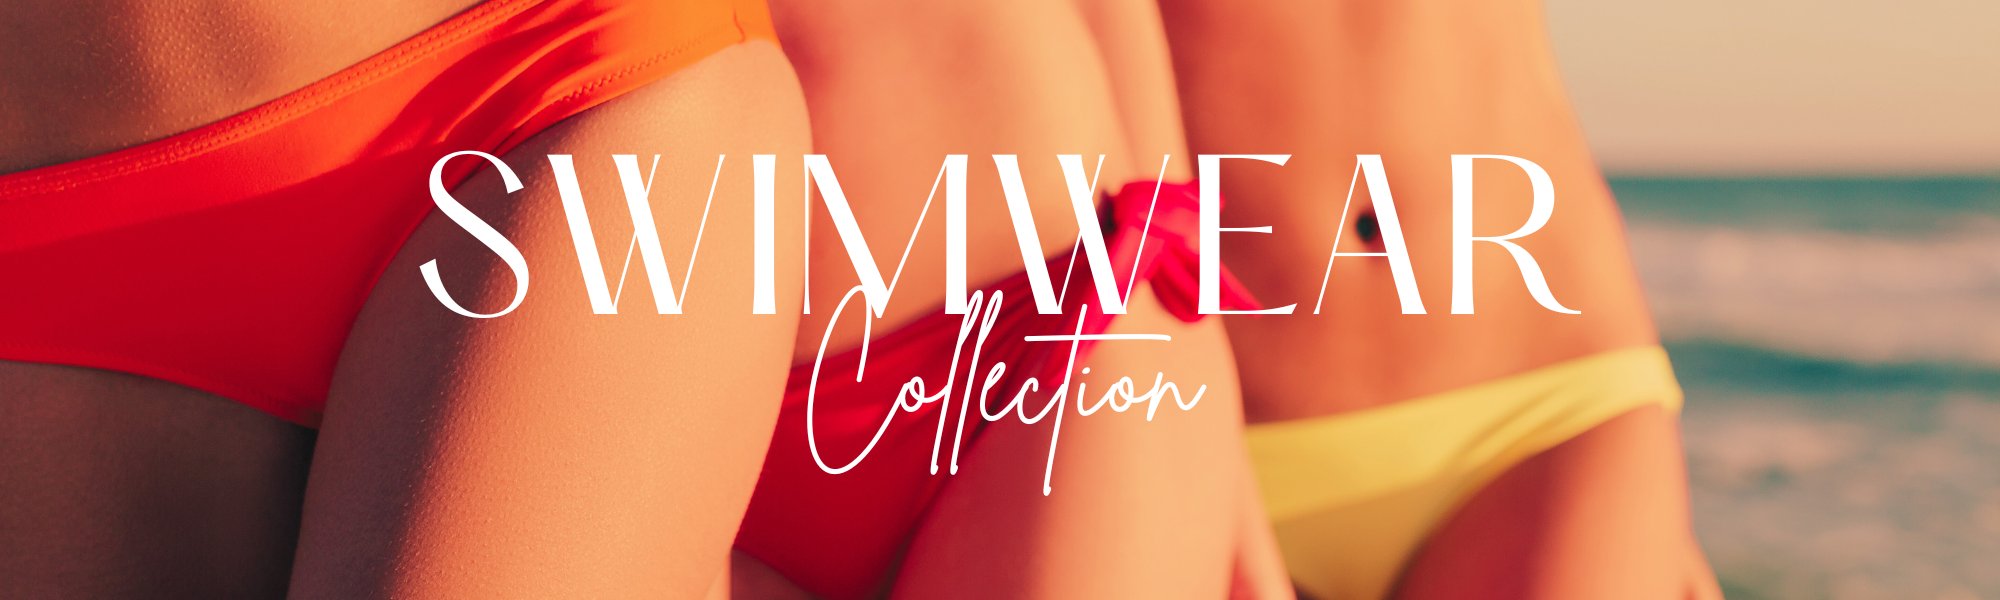 Swimwear Collection - Marianne Jones